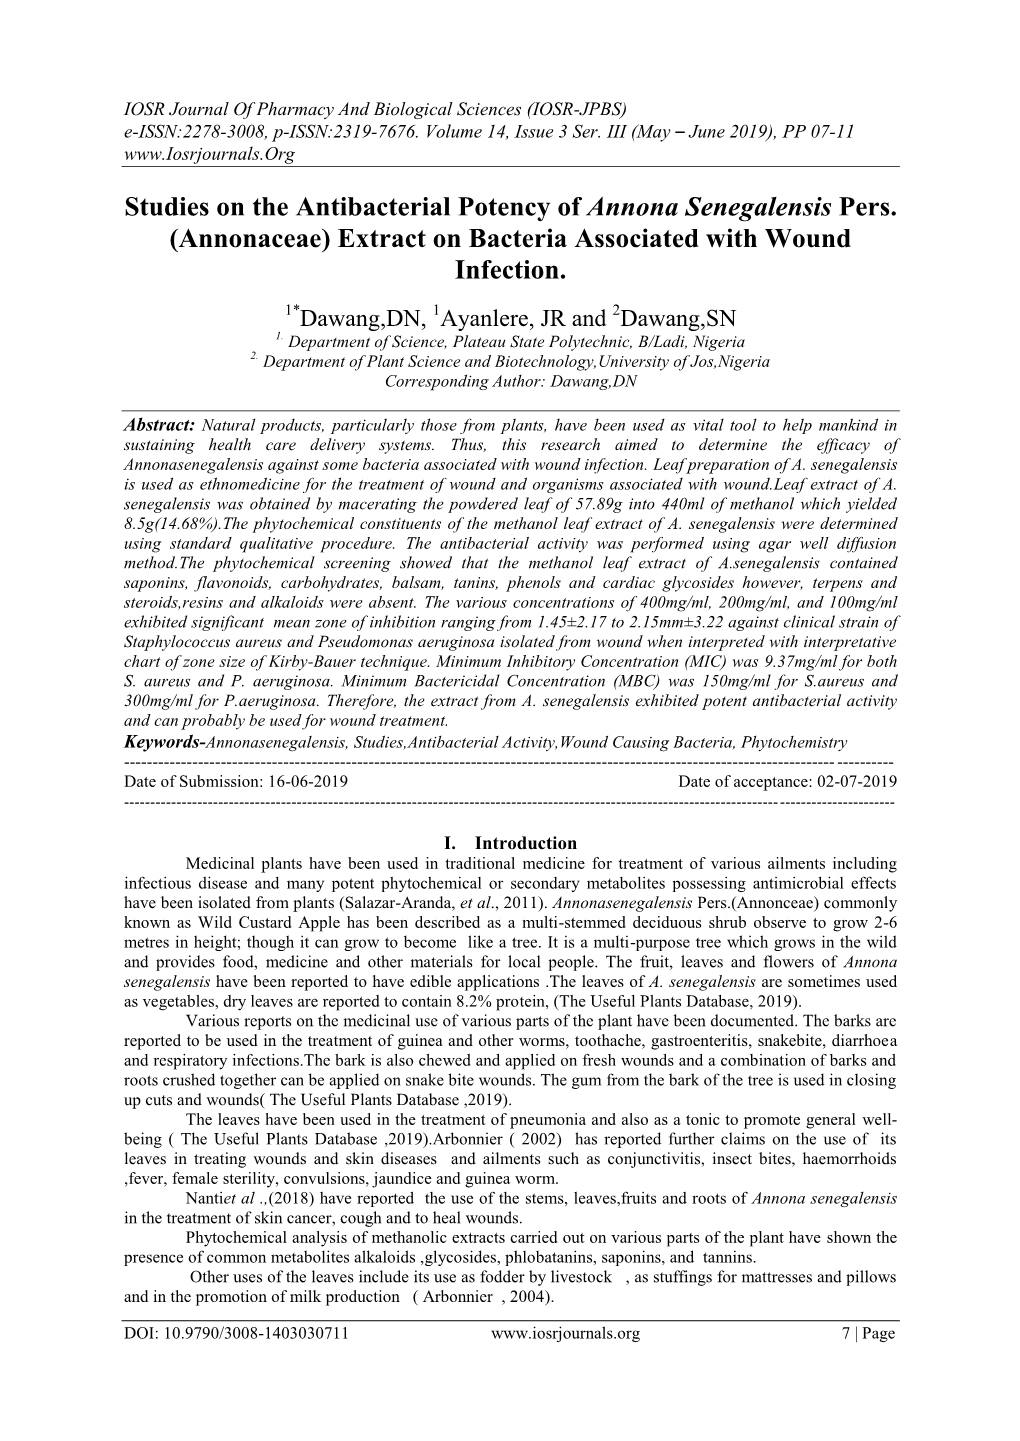 Studies on the Antibacterial Potency of Annona Senegalensis Pers